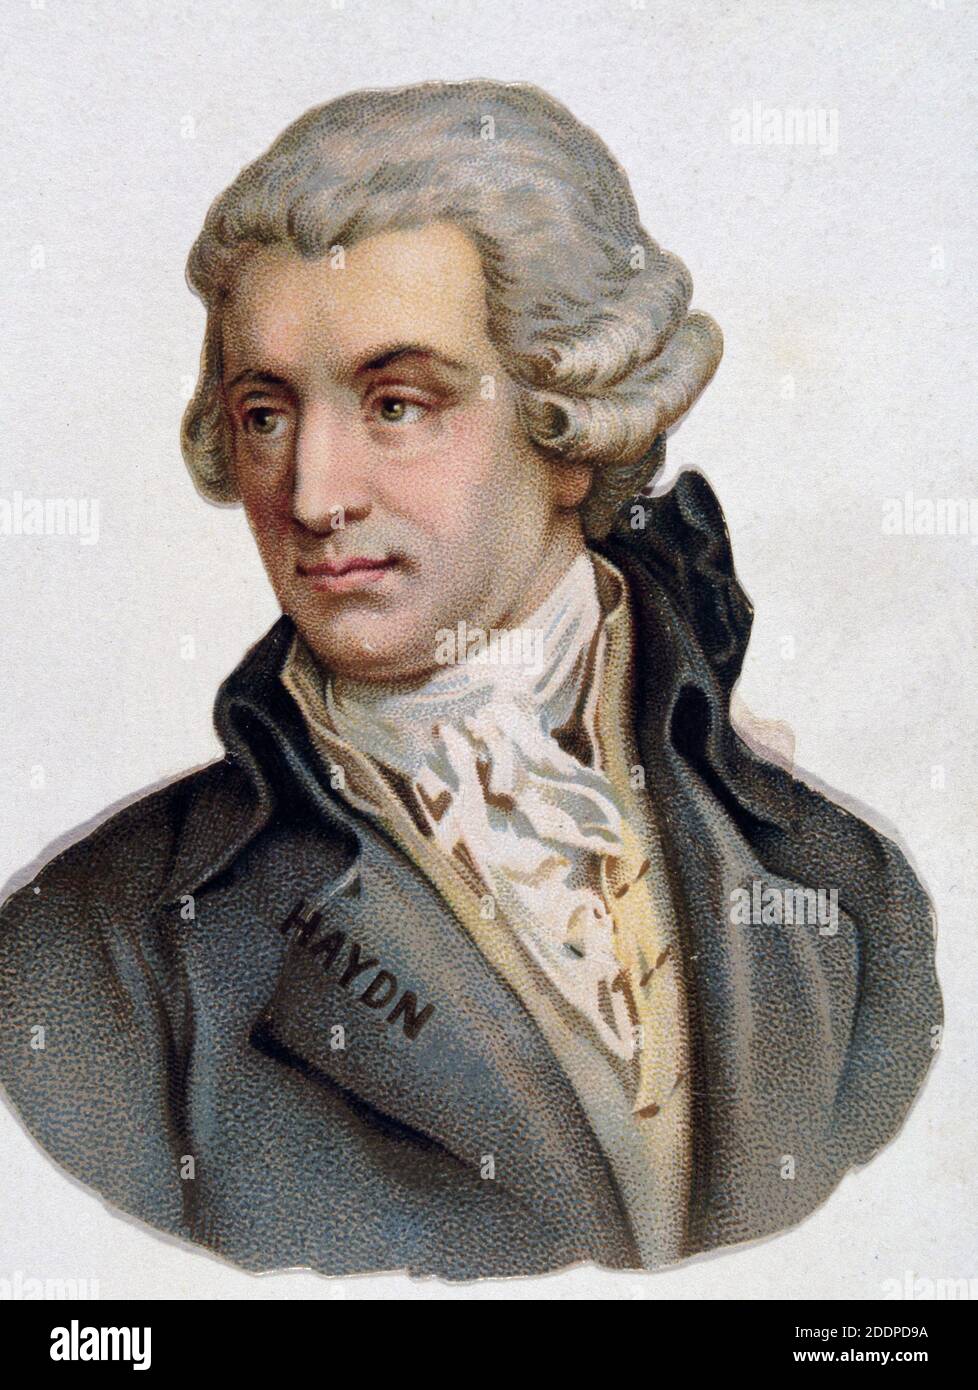 HAYDN, JOSEPH. COMPOSITOR AUSTRIACO. 1732-1809 LITOGRAFIA. Stock Photo